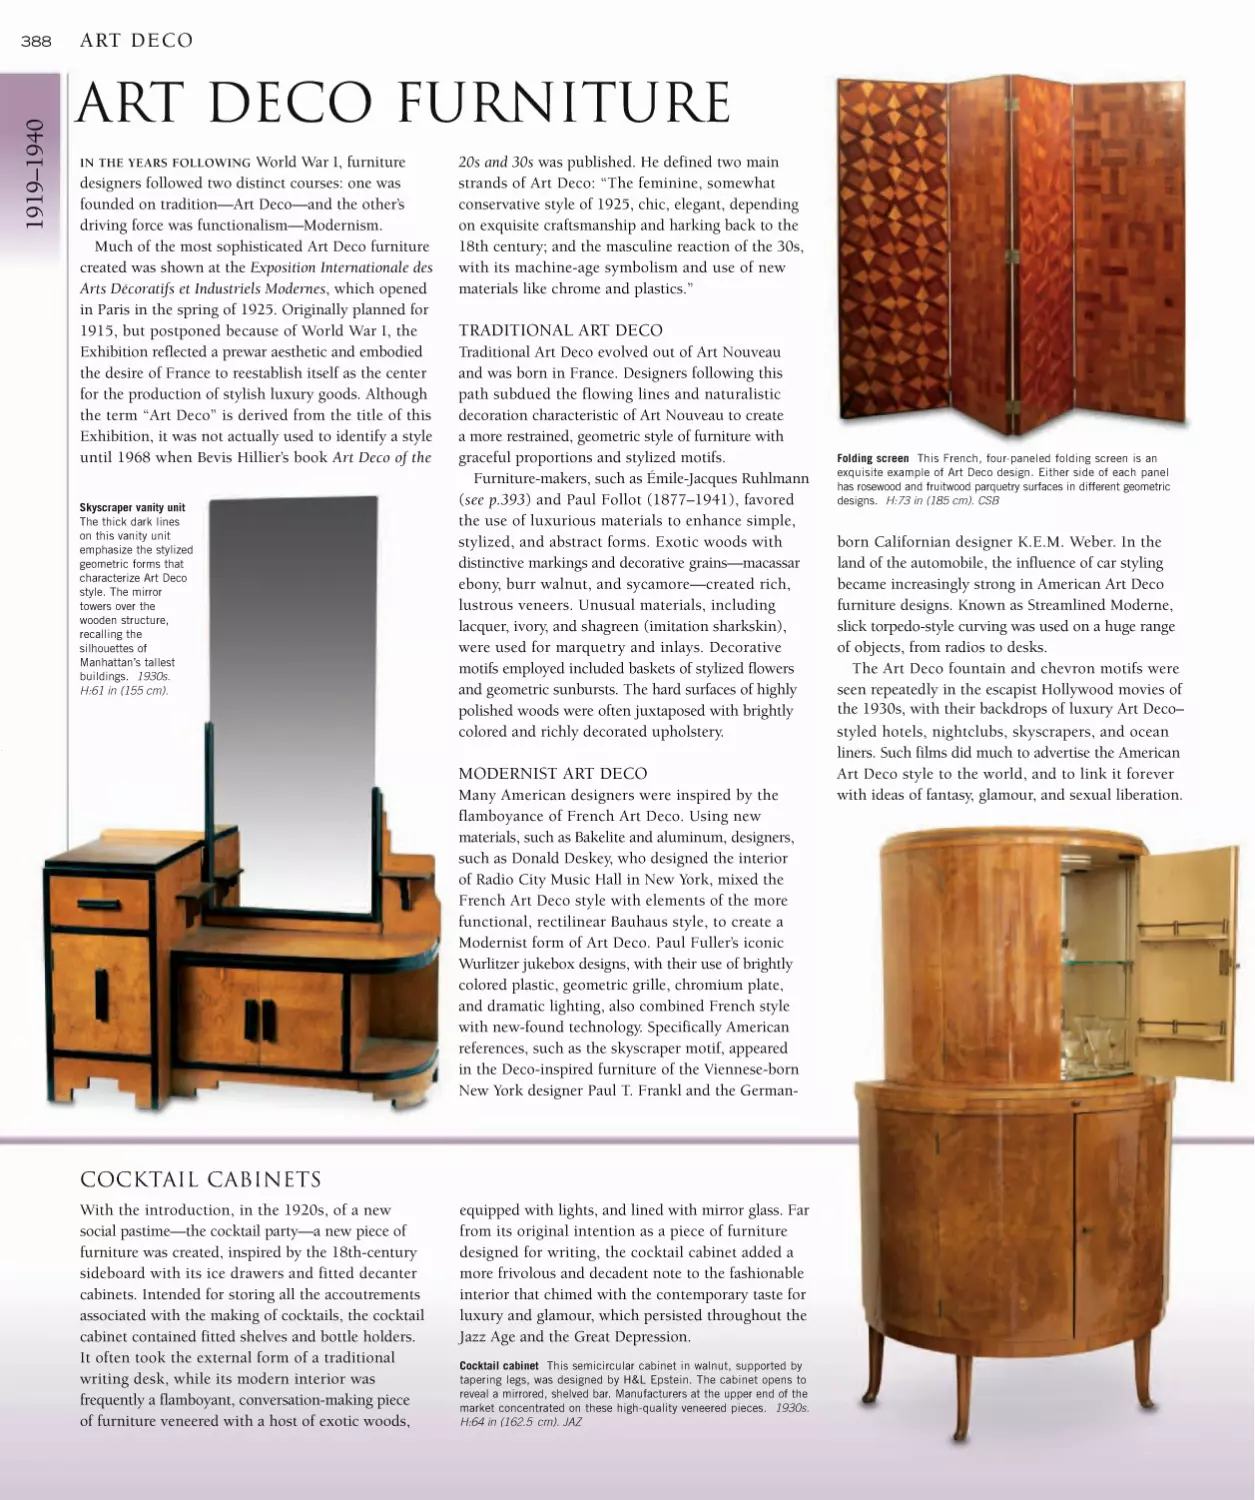 388 Art Deco Furniture